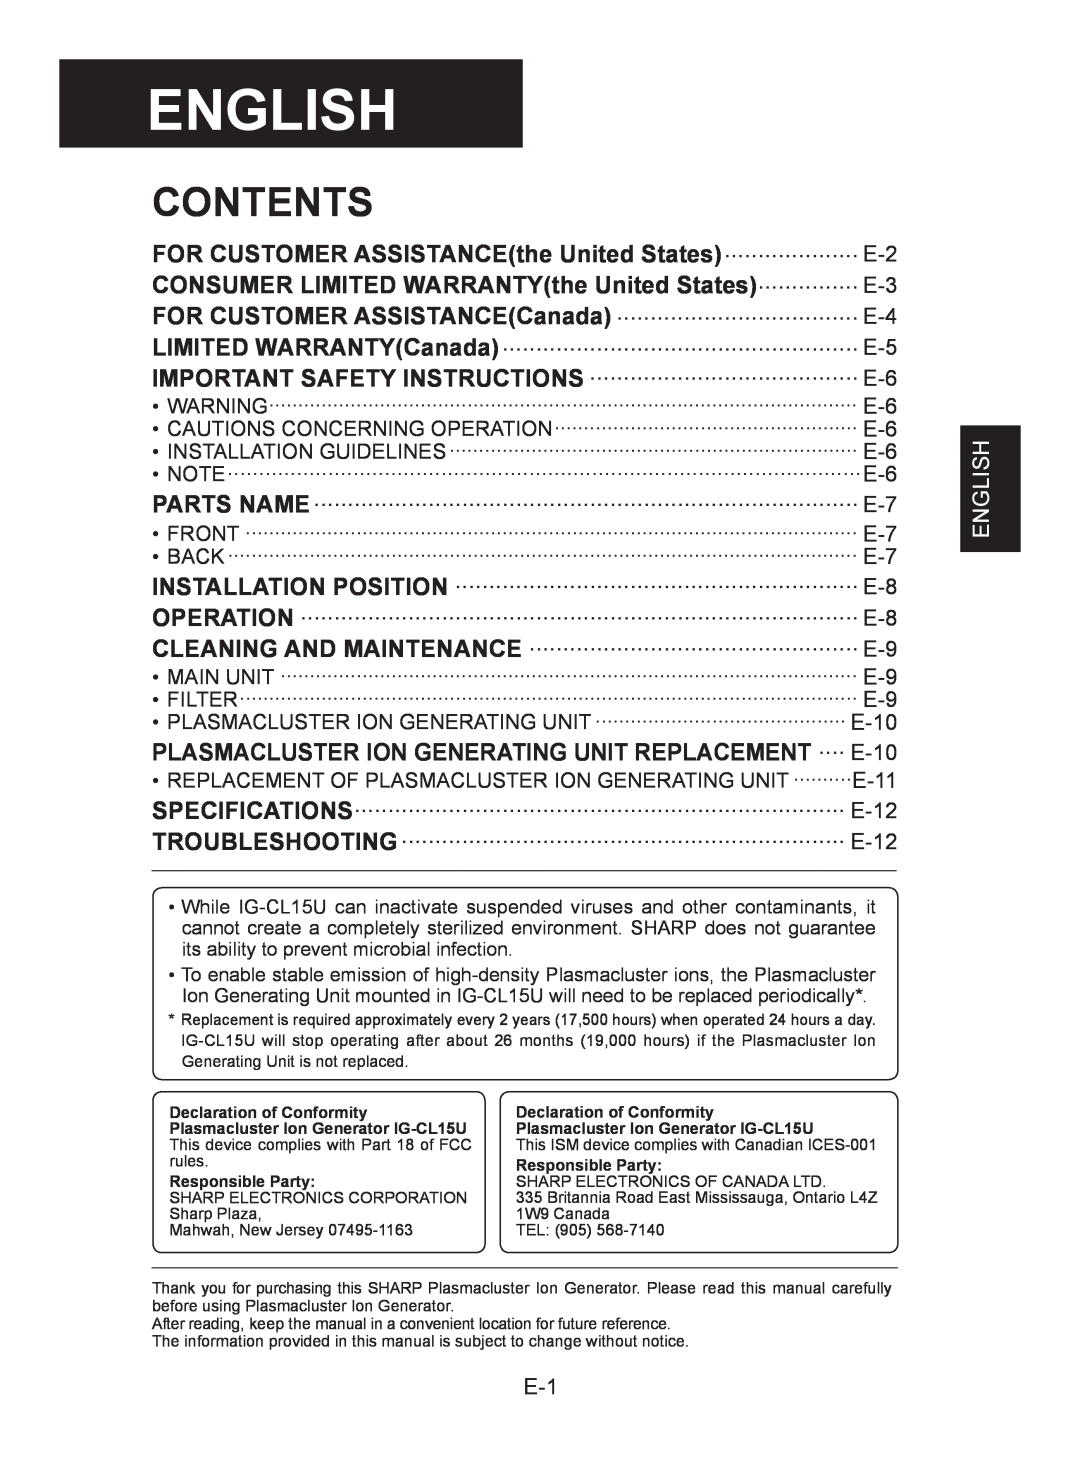 Sharp IG-CL15U operation manual English, Contents 